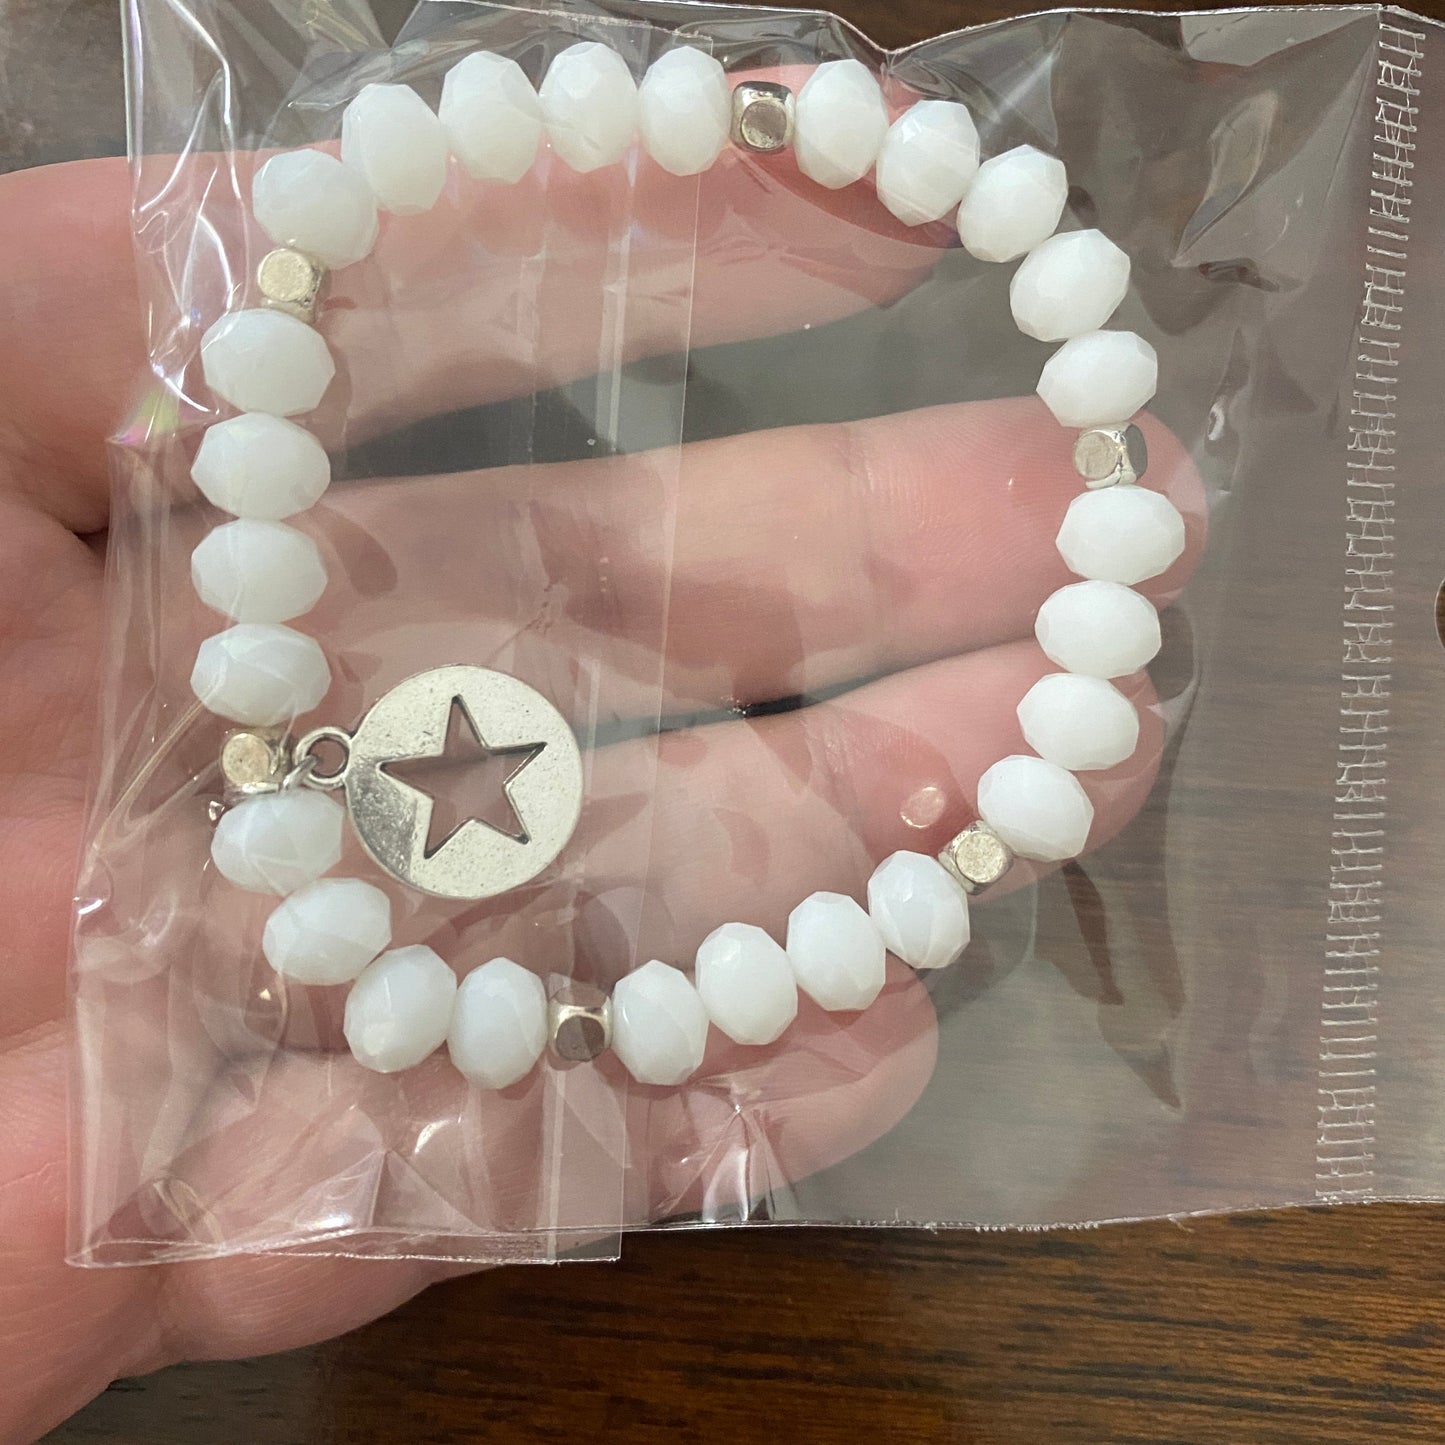 Bracelet - Medium Sized Bead with Charm